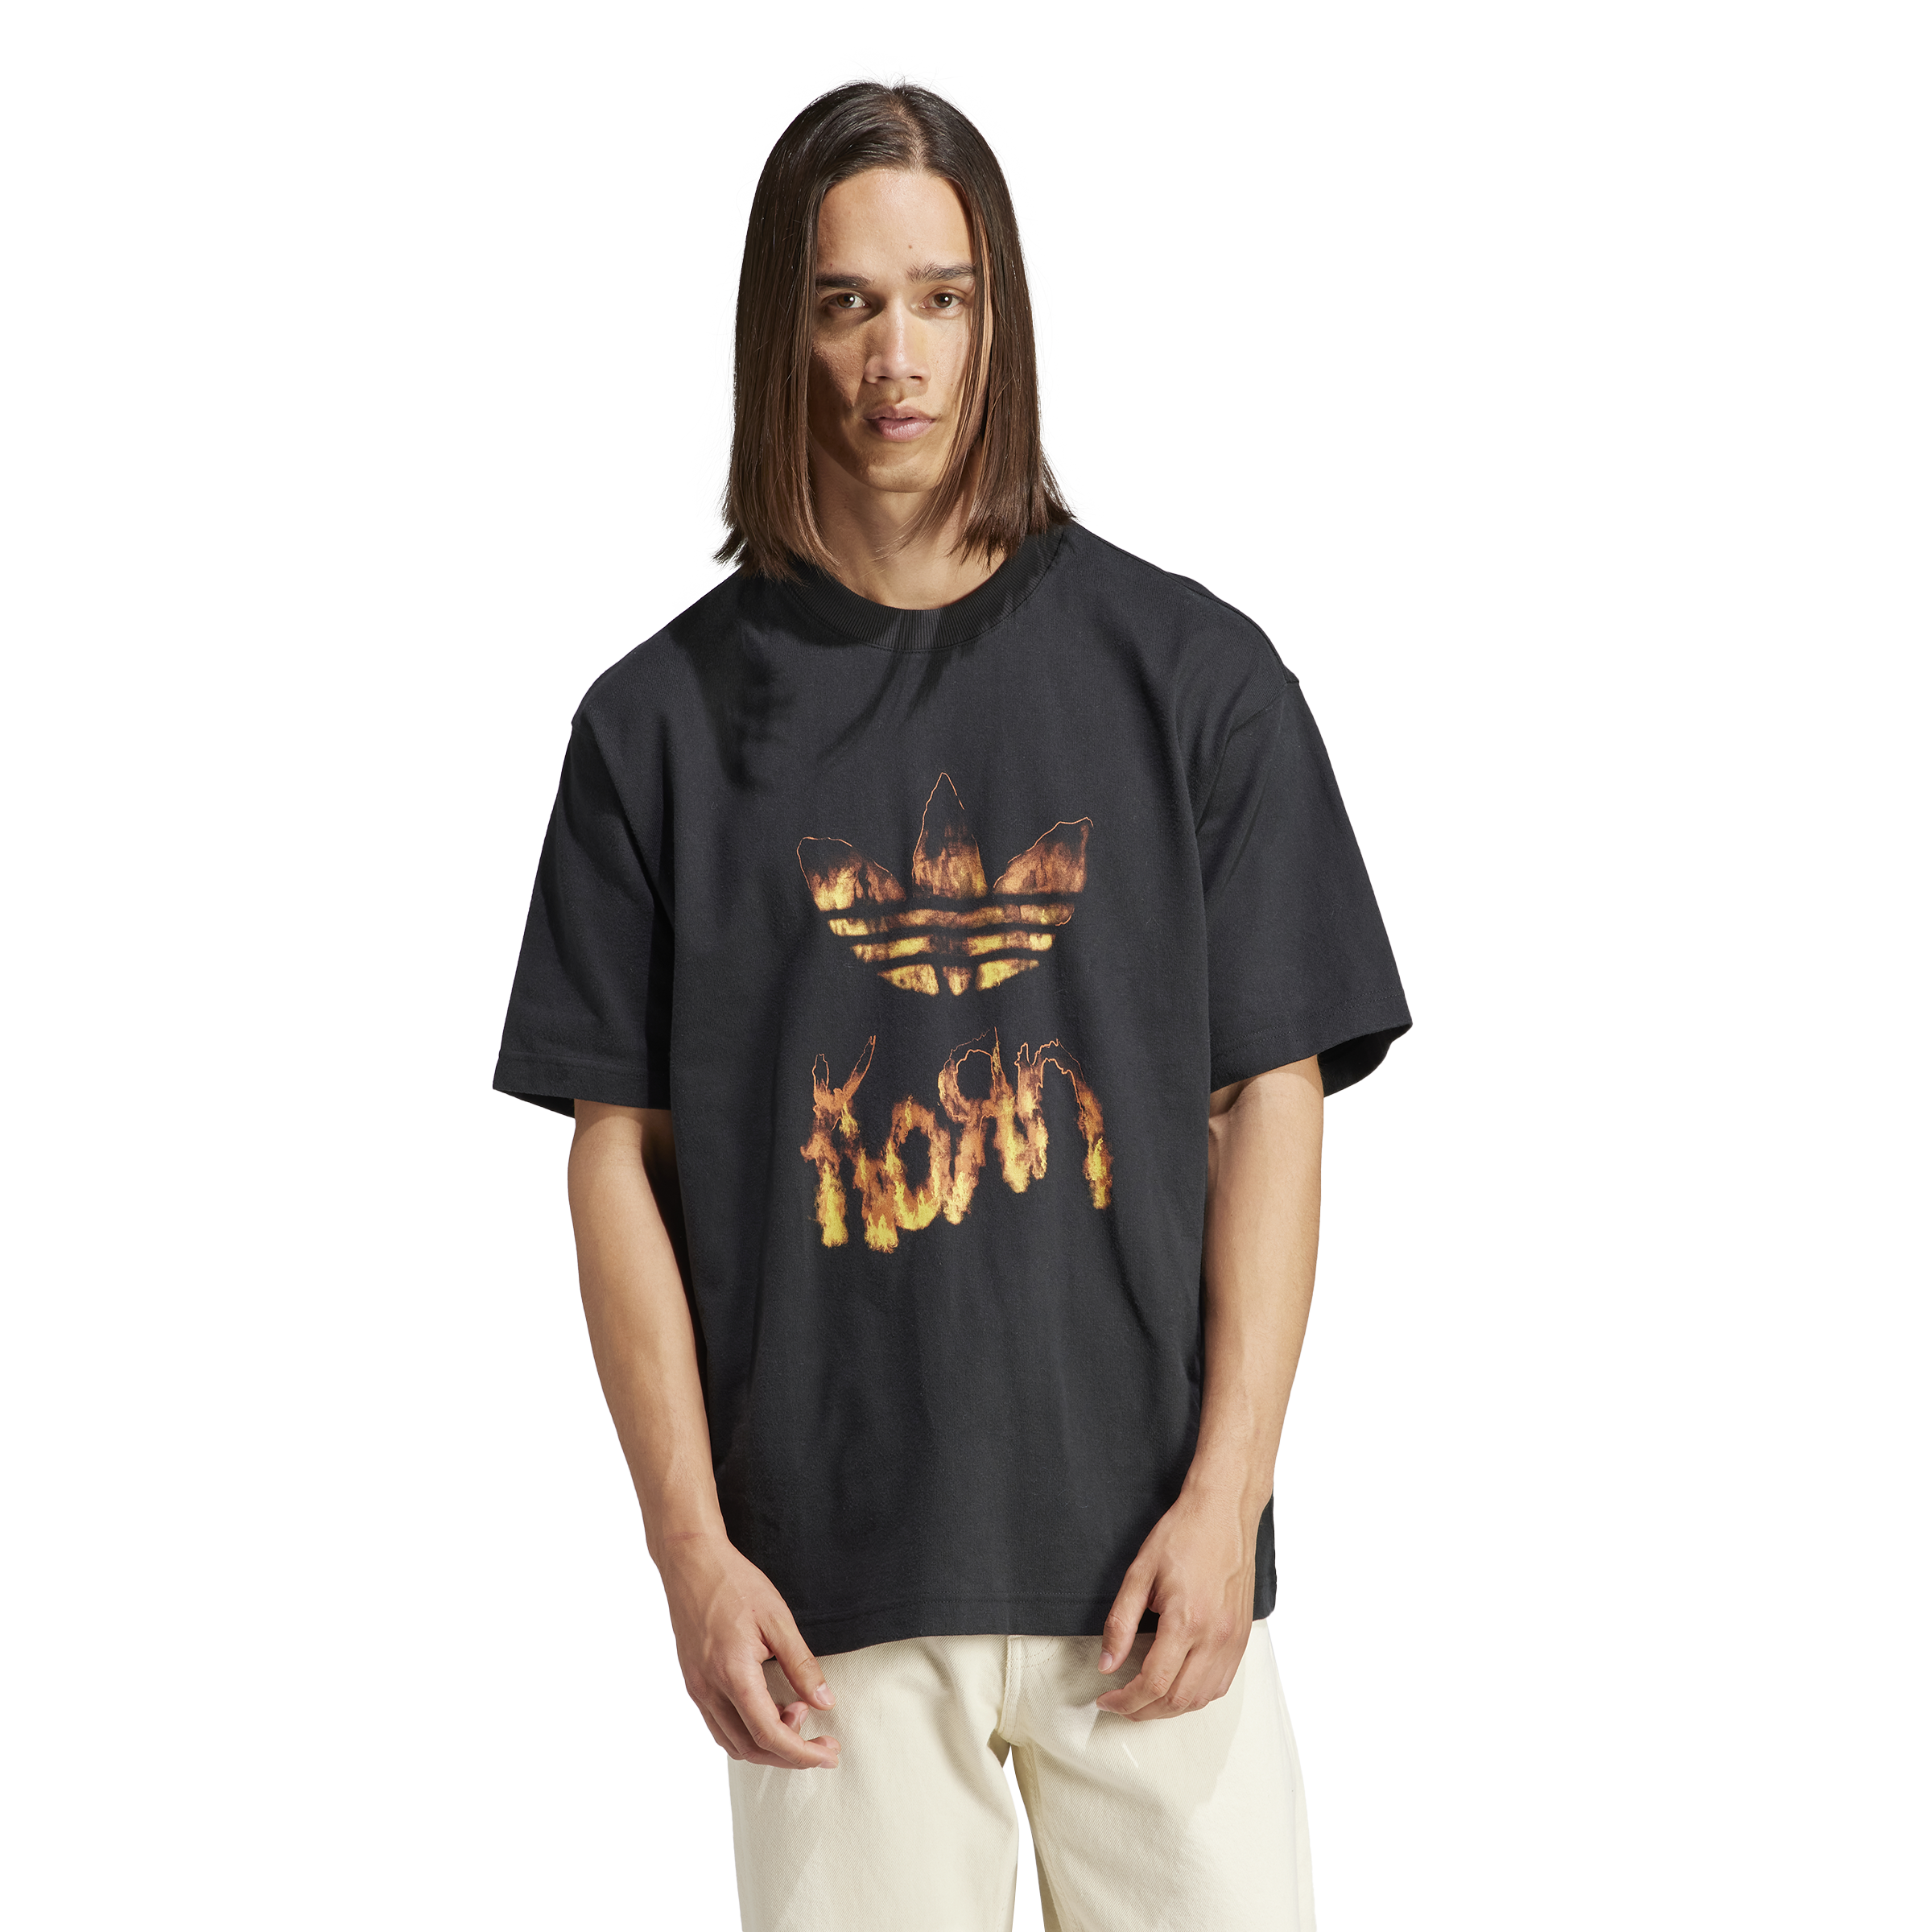 adidas x Korn T-Shirt "Black"アディダス x コーン